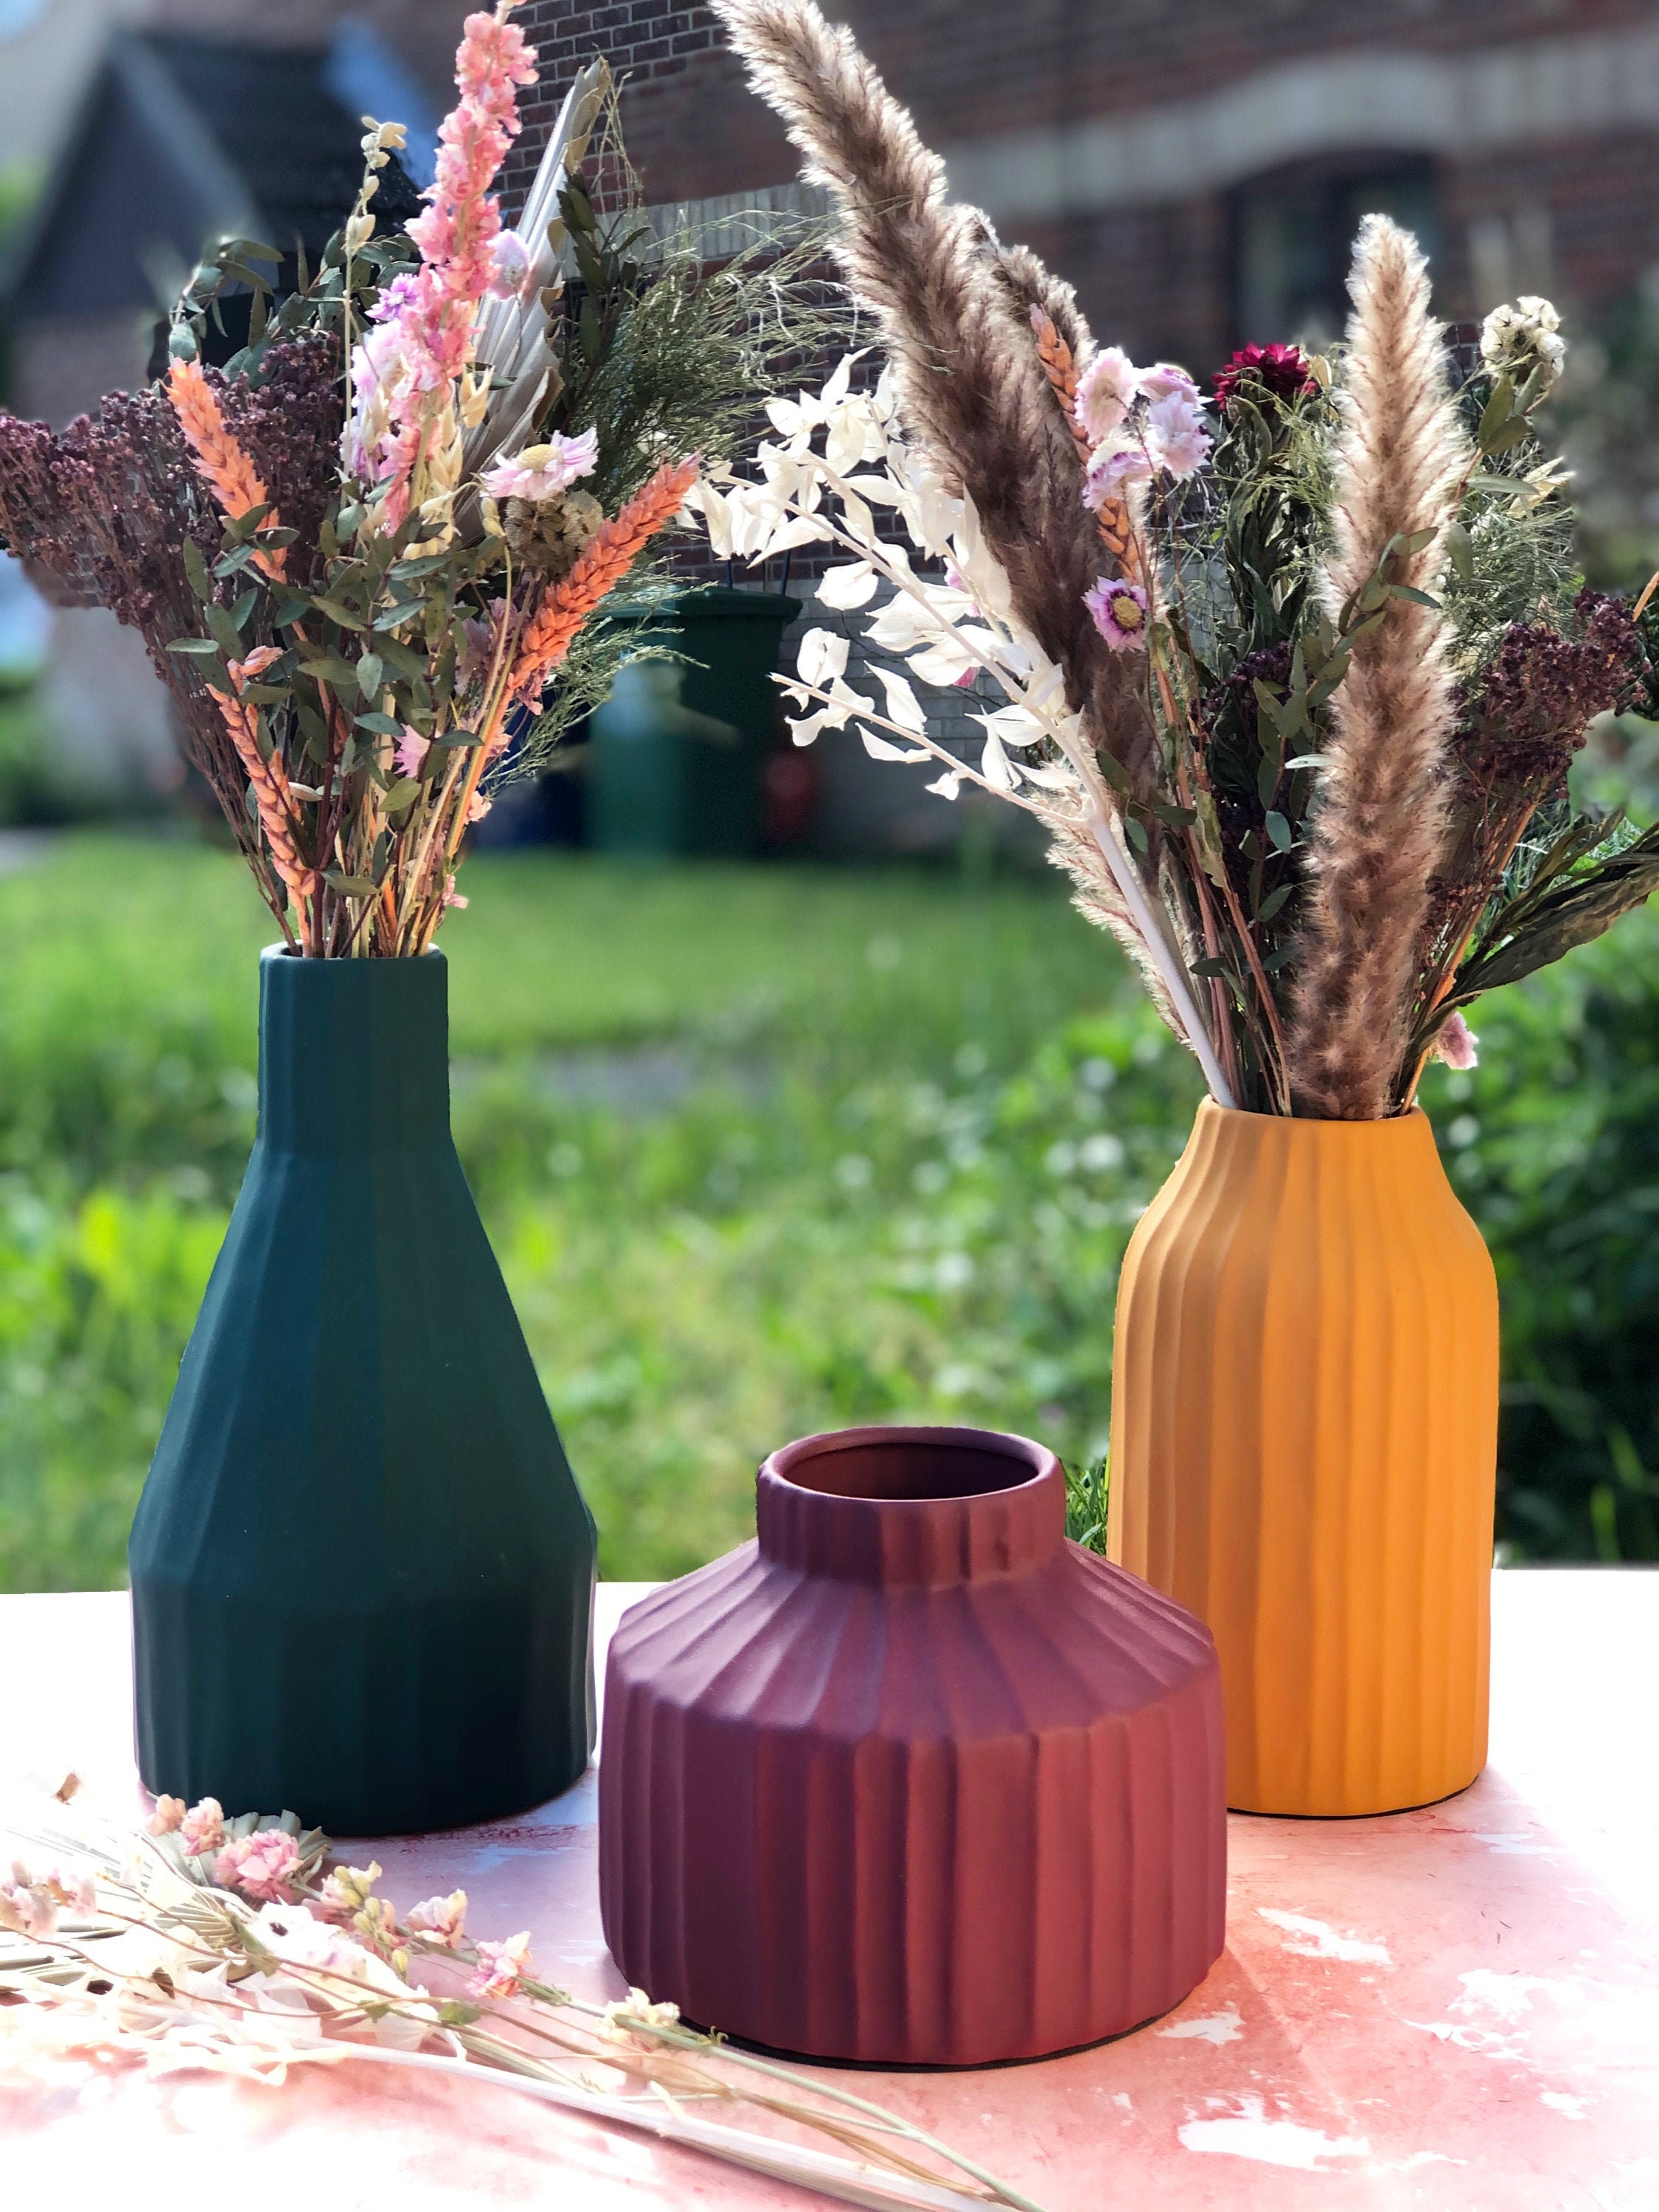 Strikingly Beautiful Ceramic Flower Vase